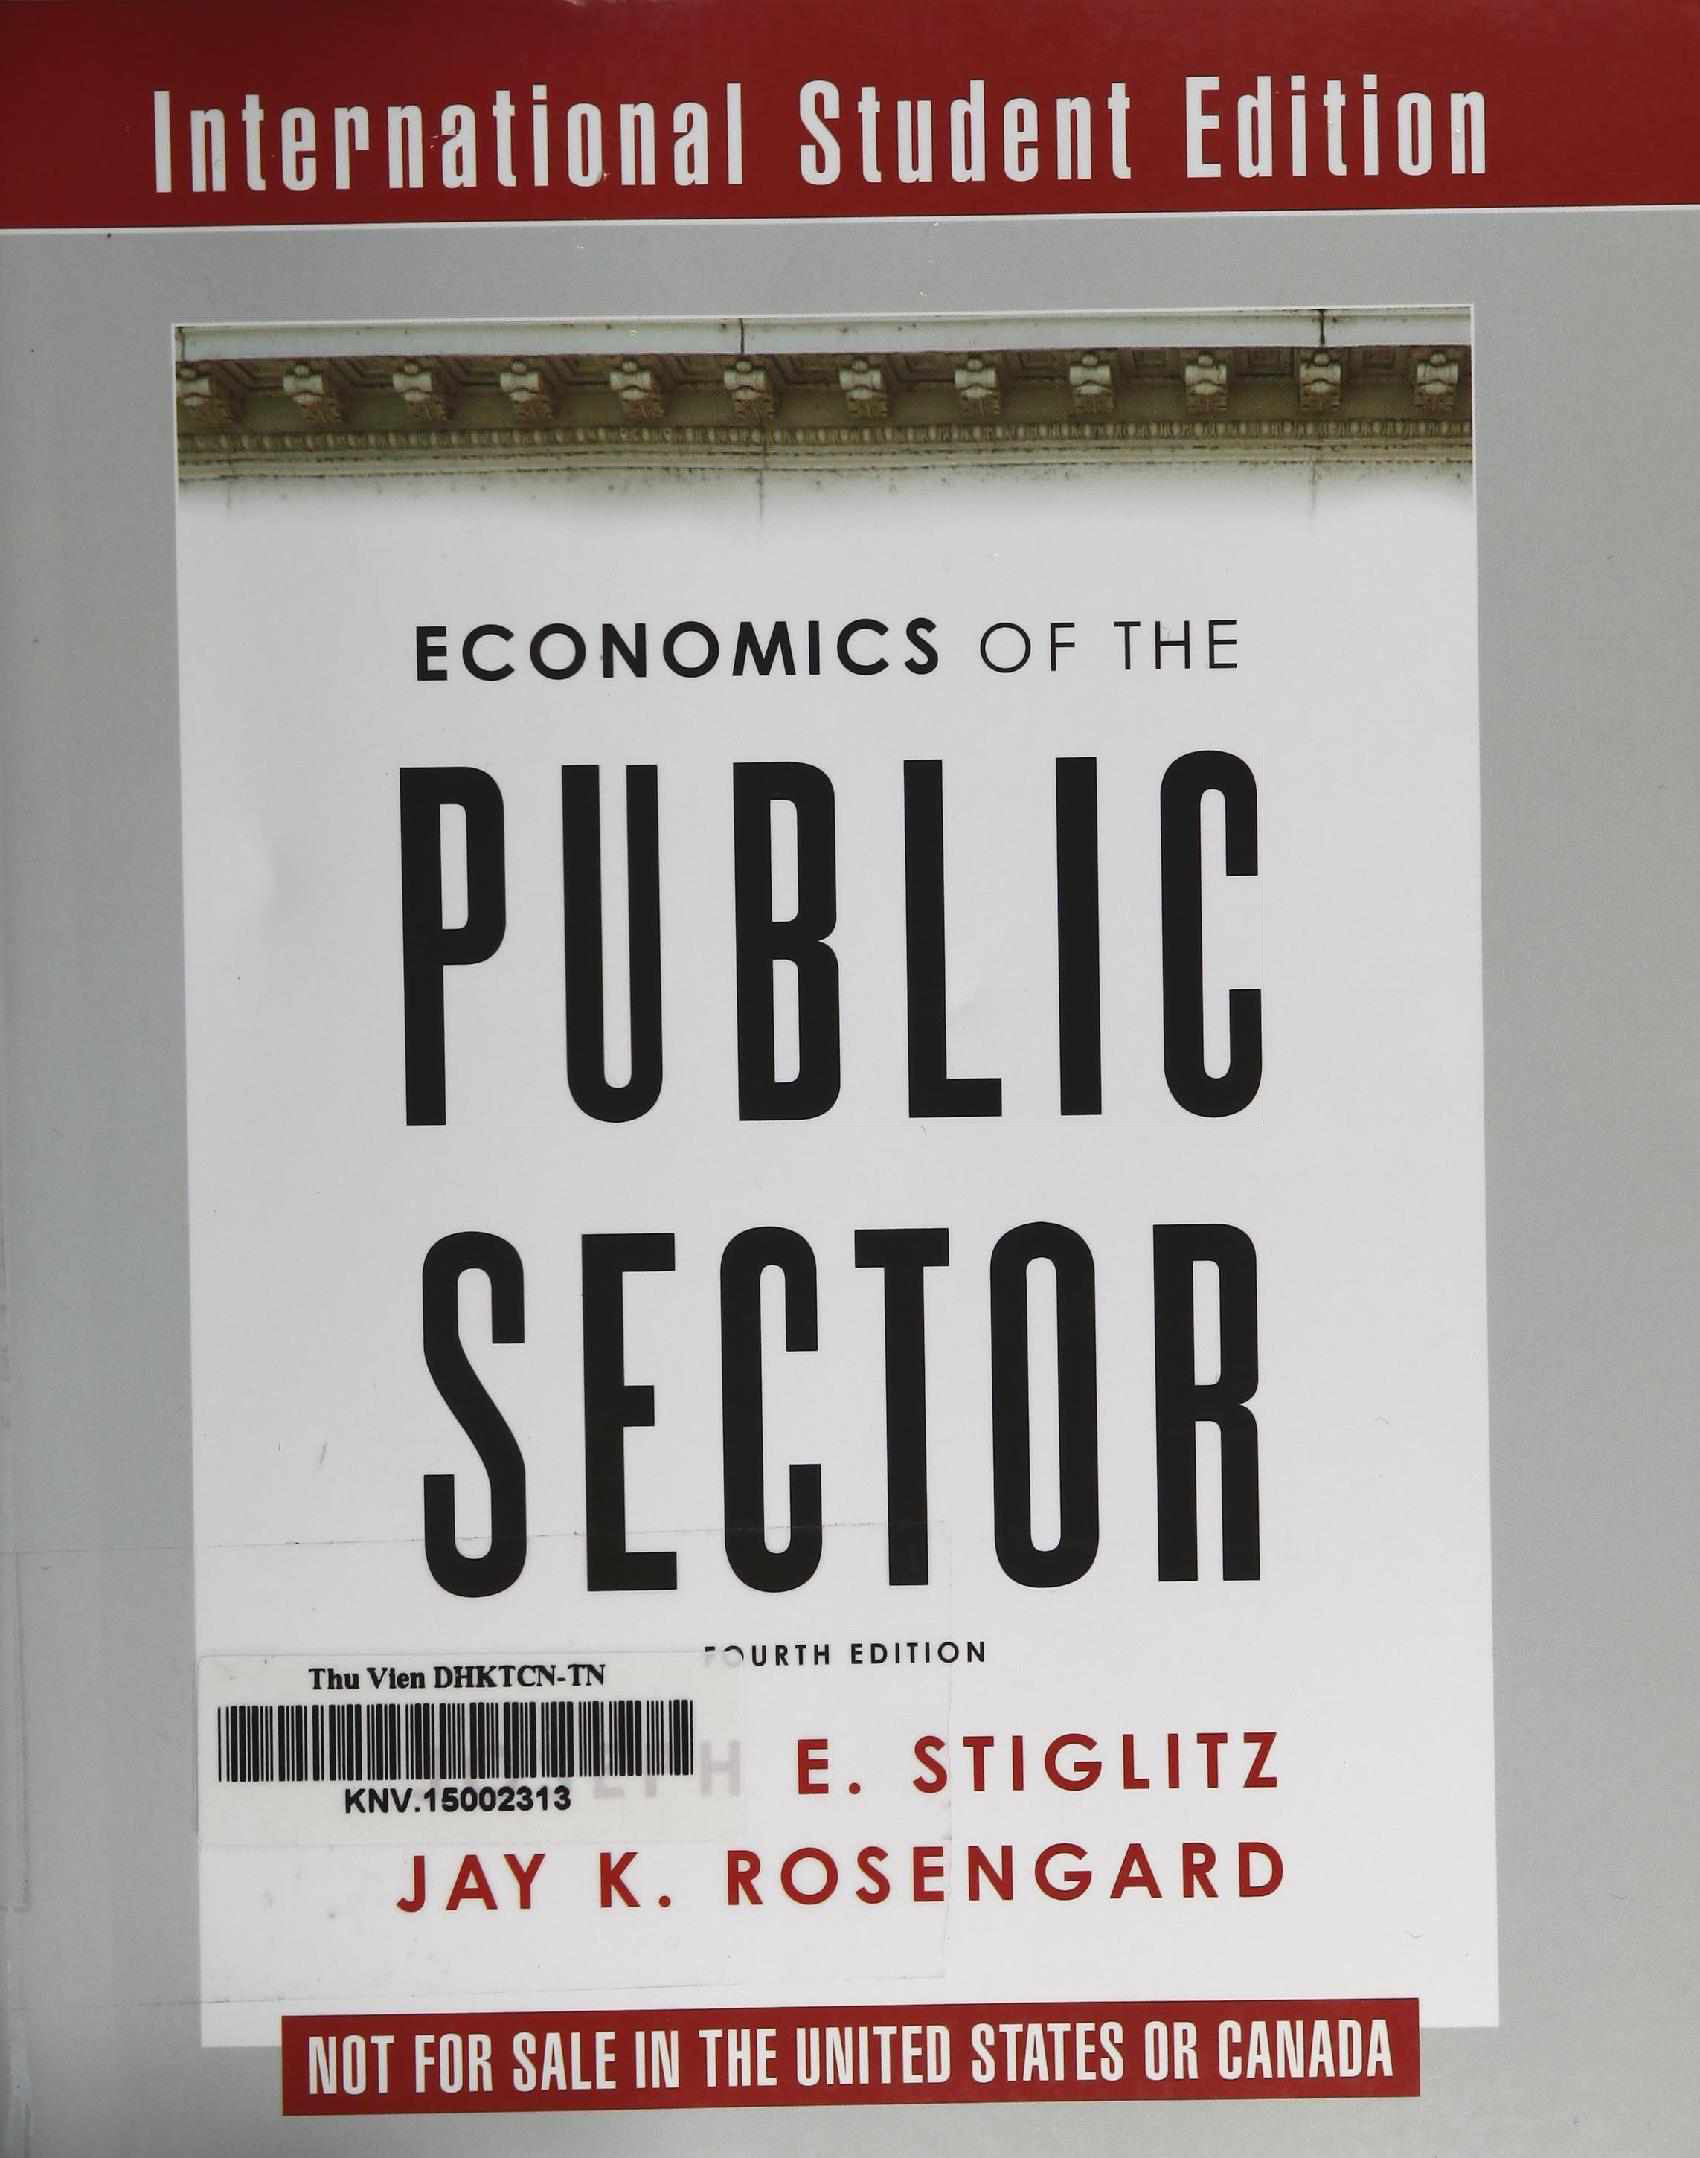 Economics of the public sector